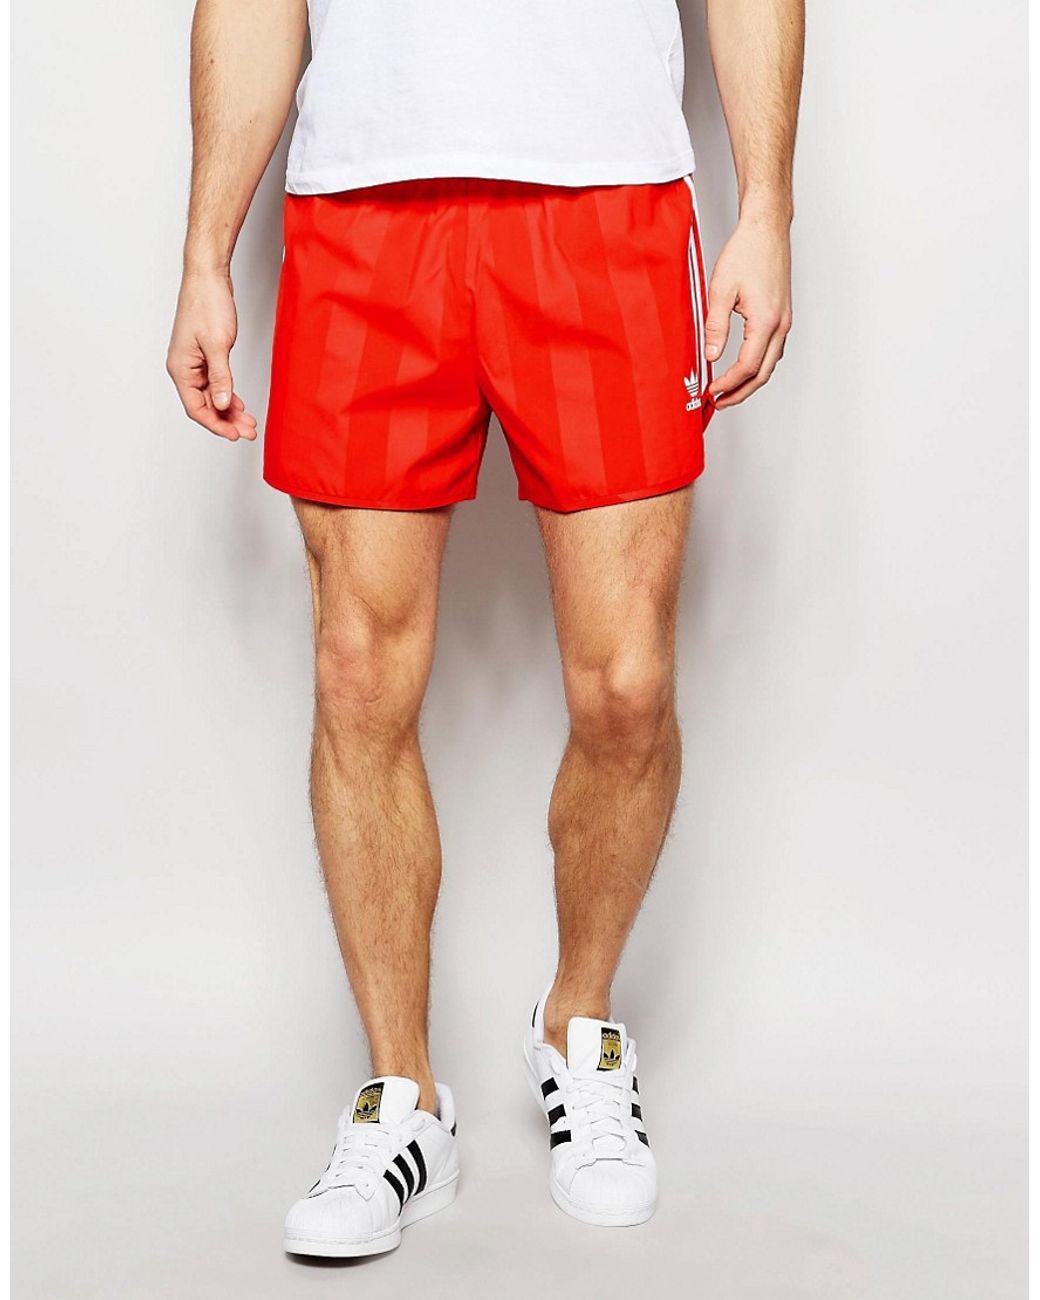 Originals шорты. Шорты мужские adidas krasniy. Шорты adidas Originals shorts. Красные шорты адидас Original. 10022529 Шорты адидас.